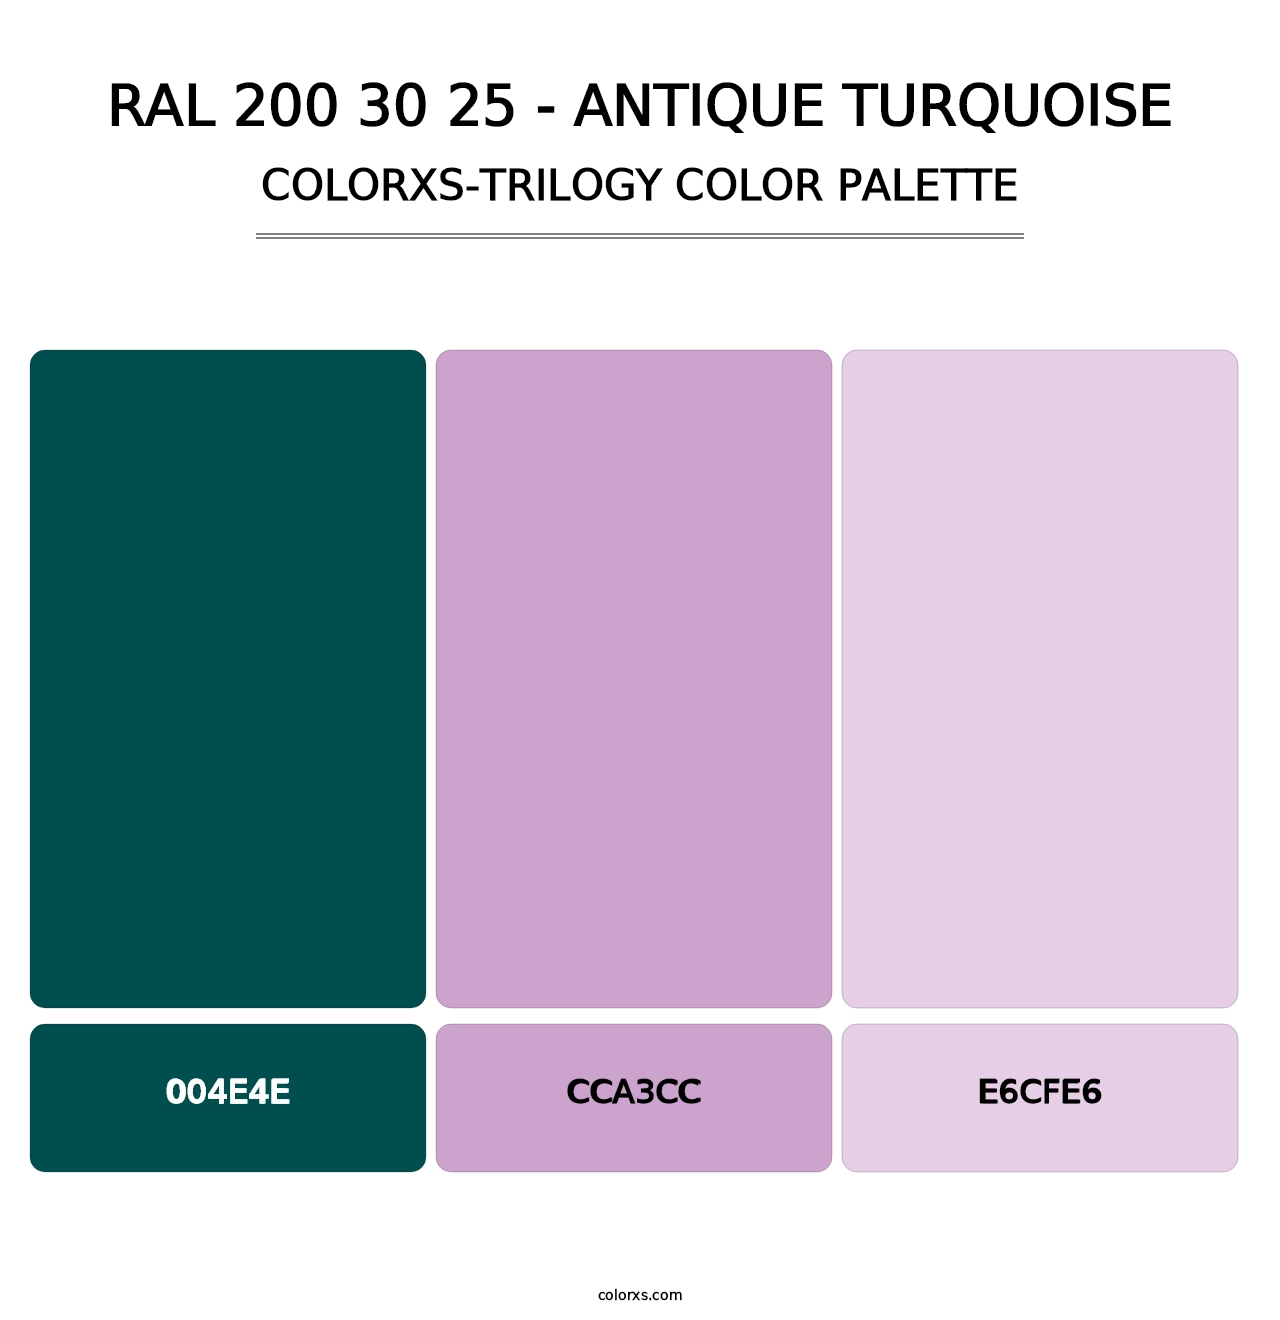 RAL 200 30 25 - Antique Turquoise - Colorxs Trilogy Palette